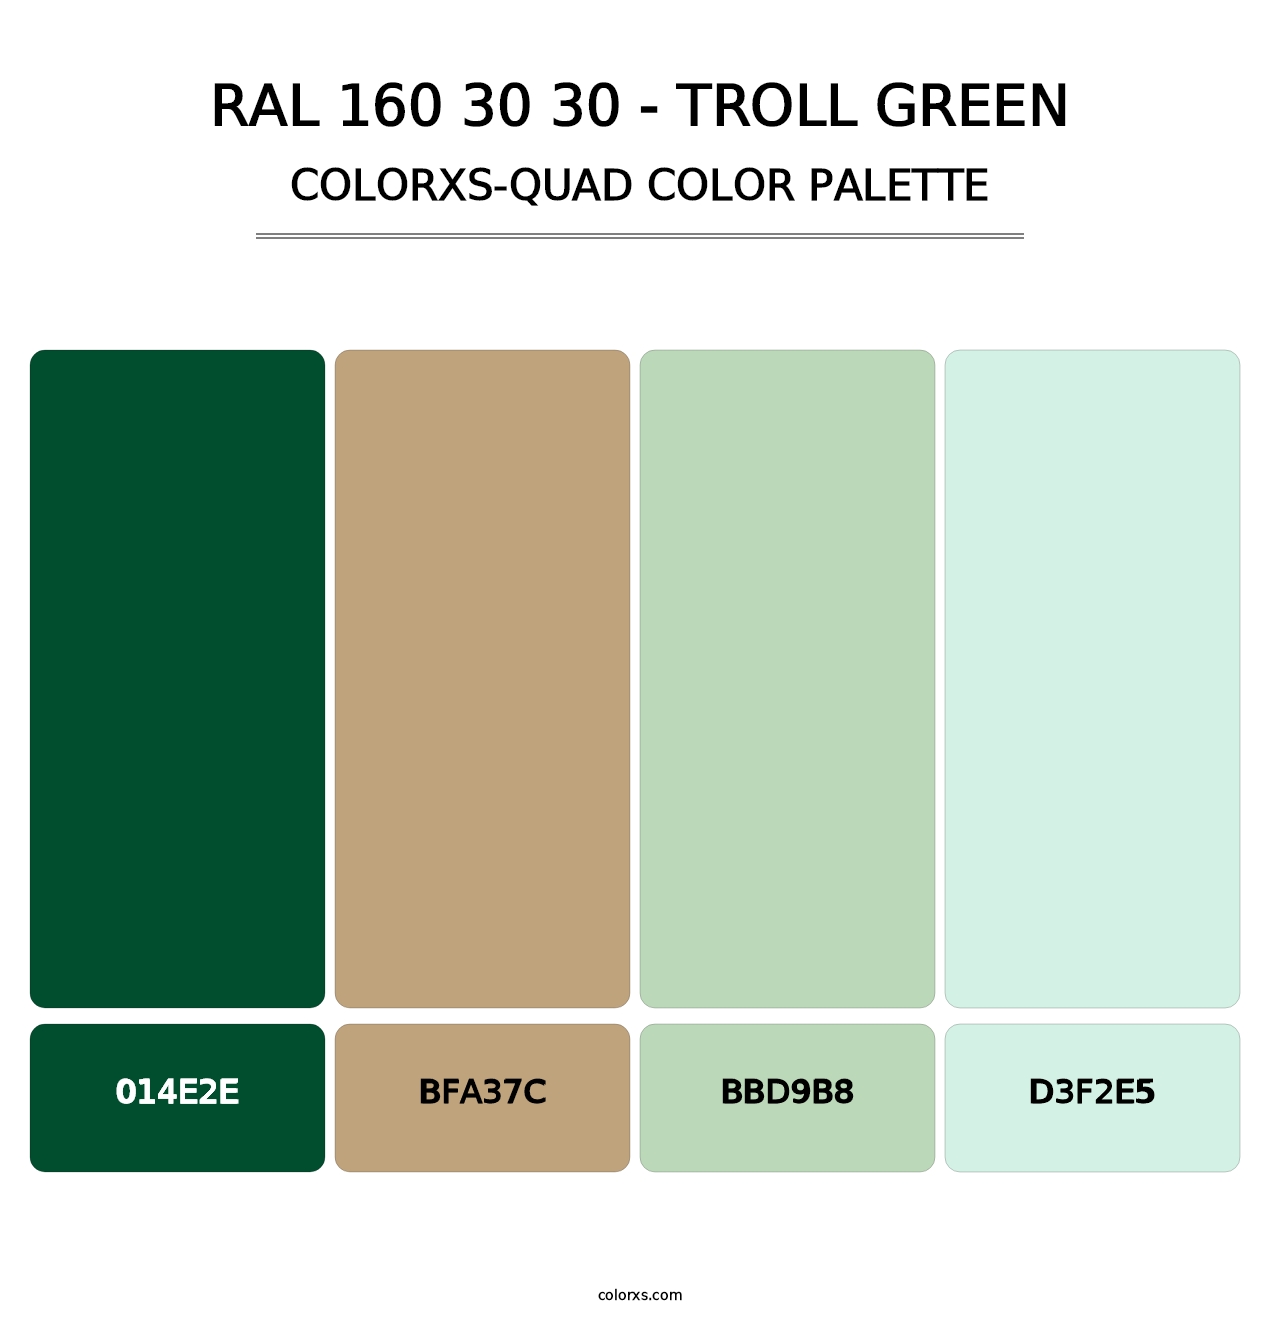 RAL 160 30 30 - Troll Green - Colorxs Quad Palette